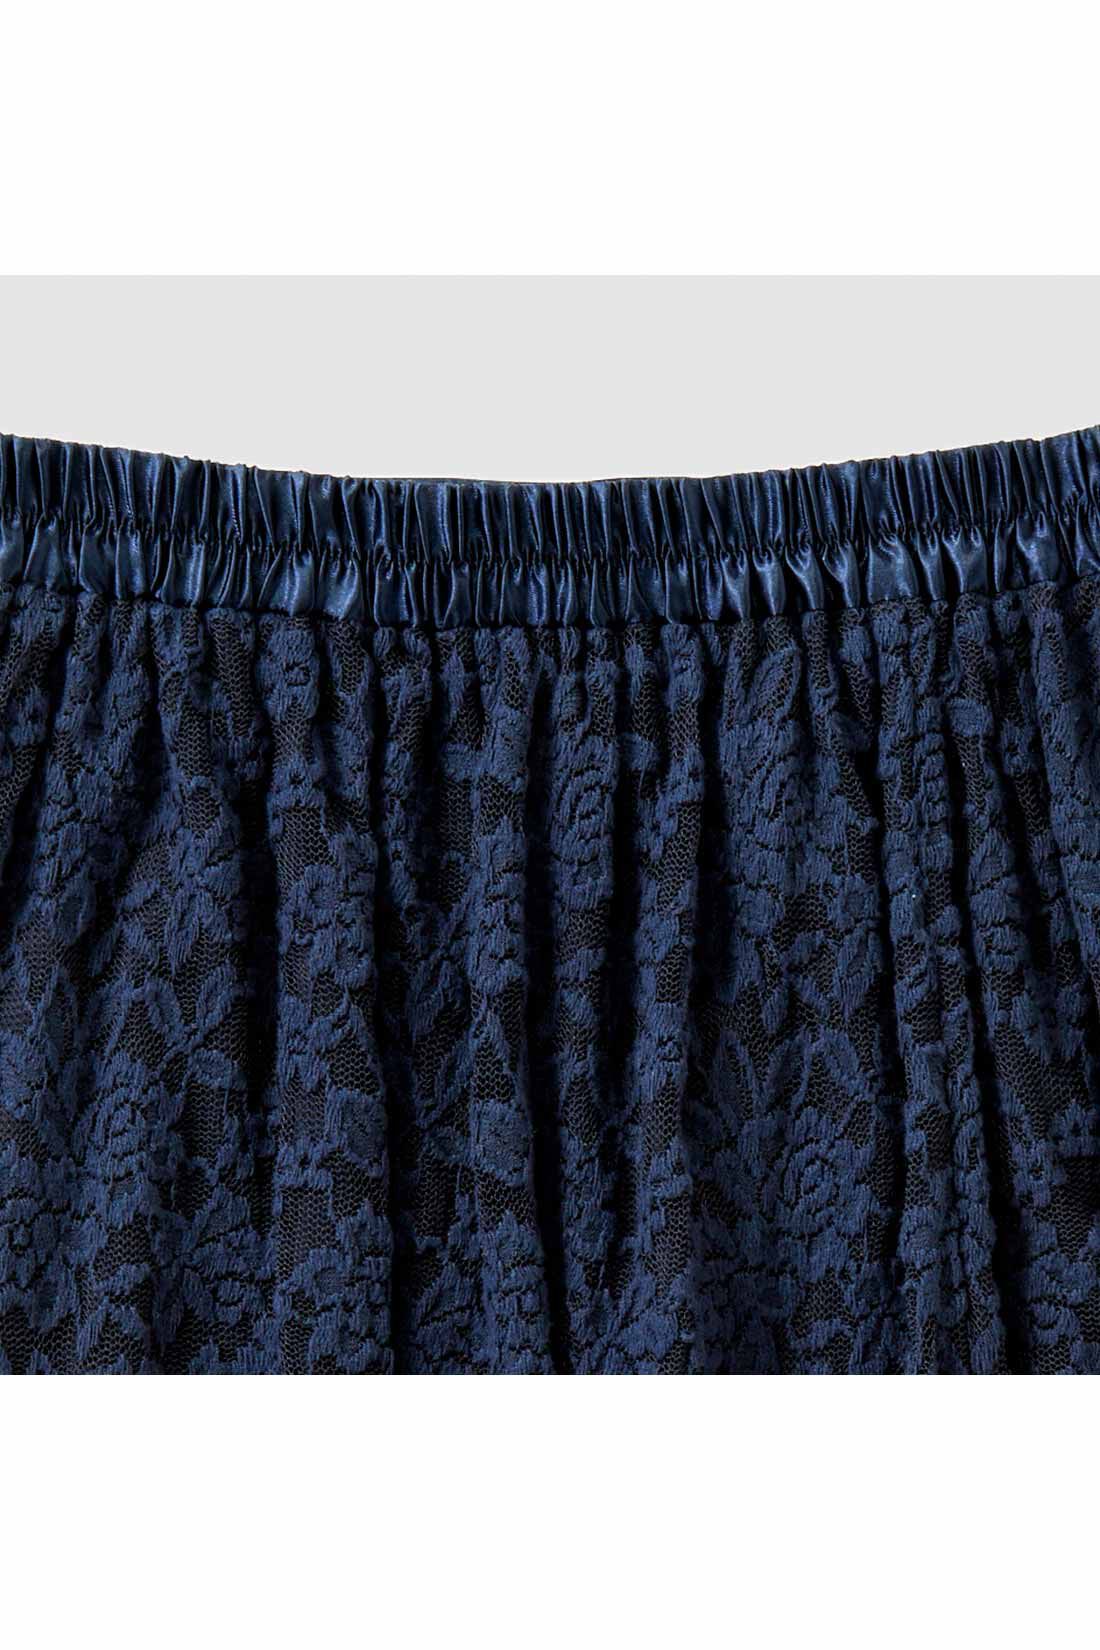 IEDIT|IEDIT[イディット]　帯電防止インナーがうれしい 起毛レーススカート〈ブラック〉|ウエストわきから後ろゴム仕様でらくちん。